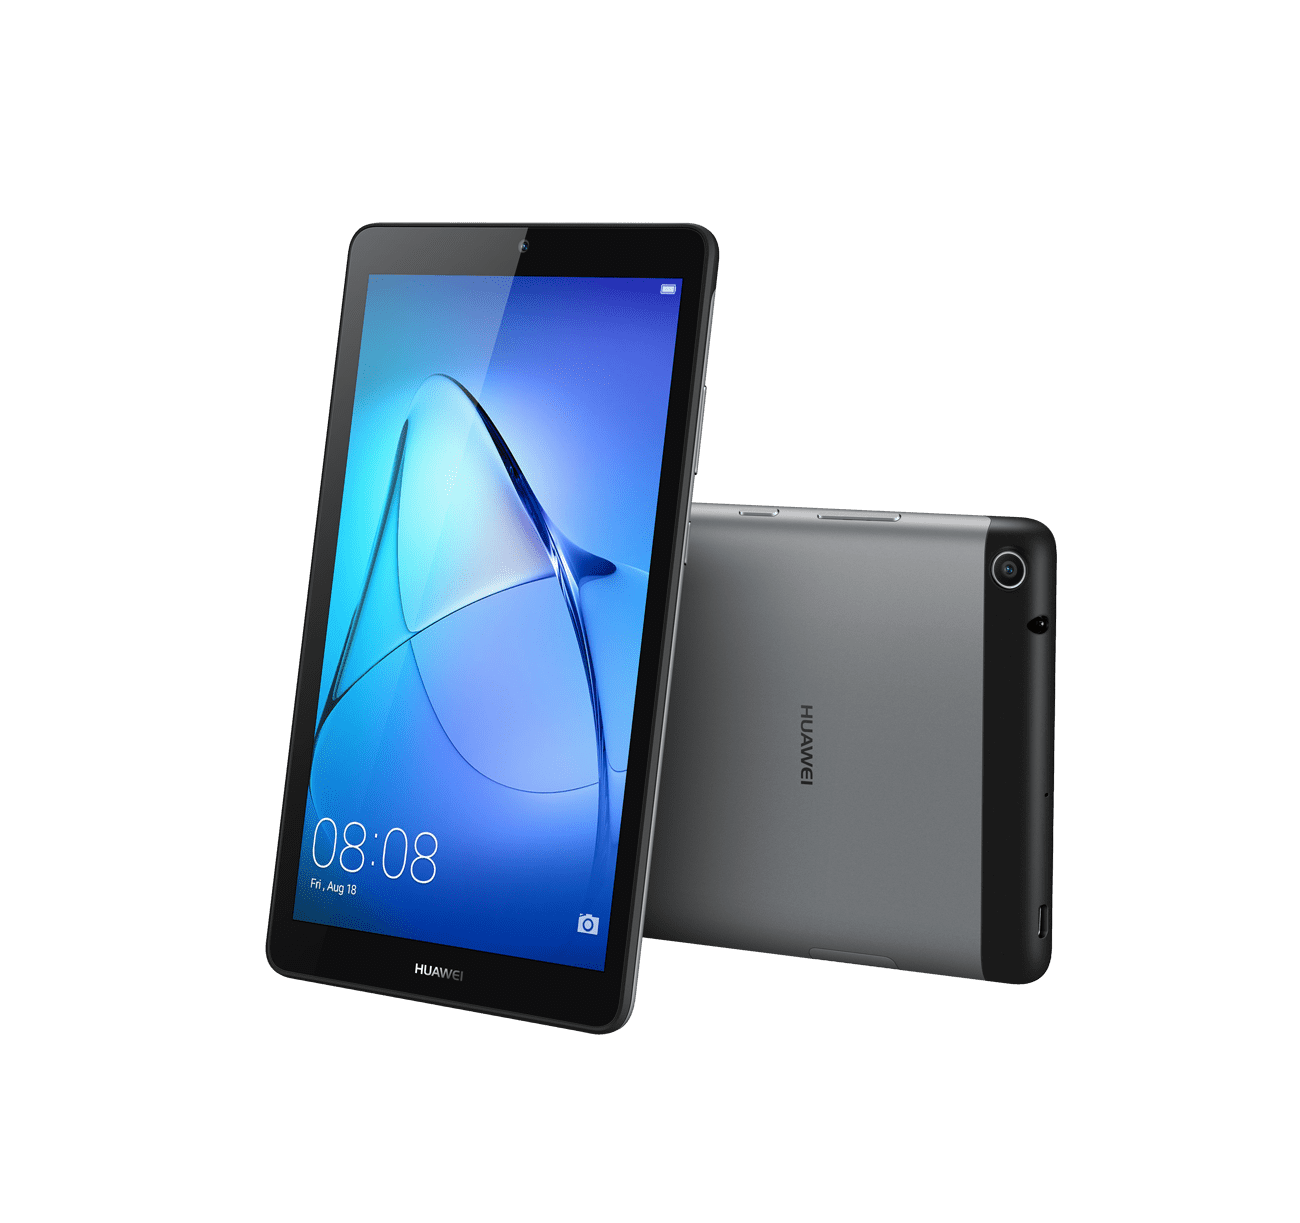 Skiing University Criminal Huawei Media Pad T3-7 inch 16GB Android Tablet - Walmart.com